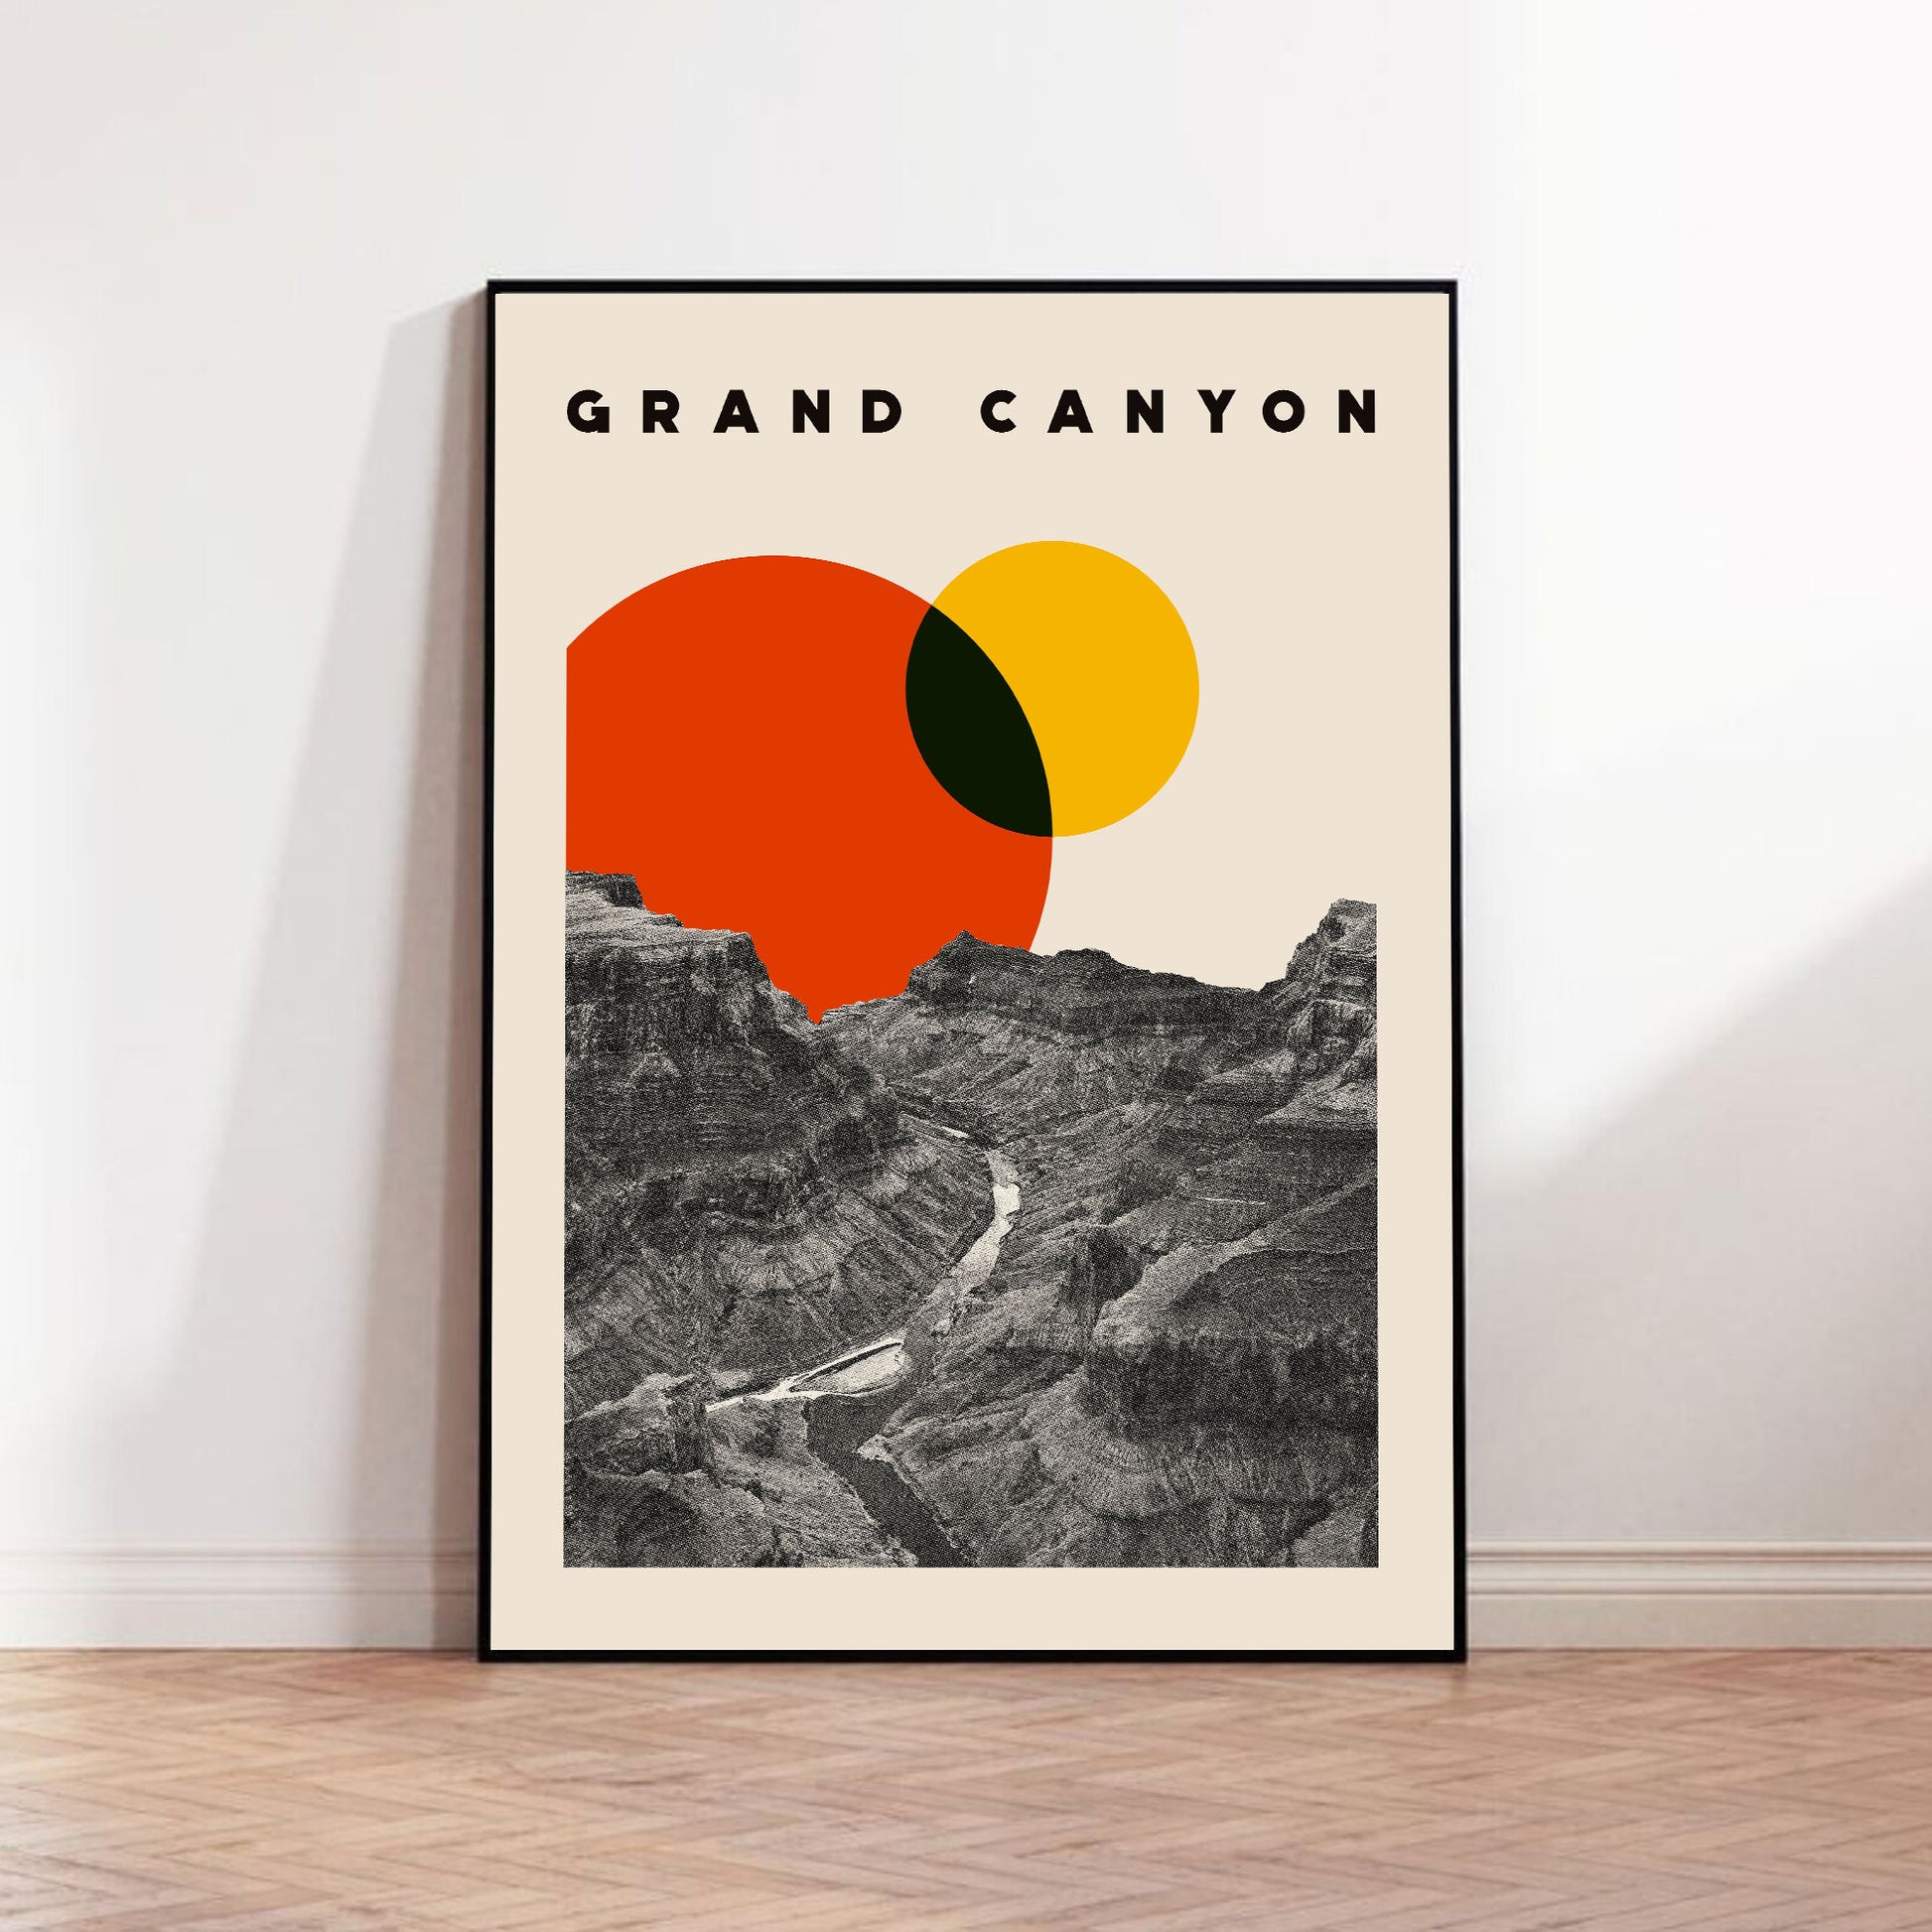 Grand Canyon National Park - Poster - Grand Canyon Park, National Park, National Park Poster, poster, Travel Poster